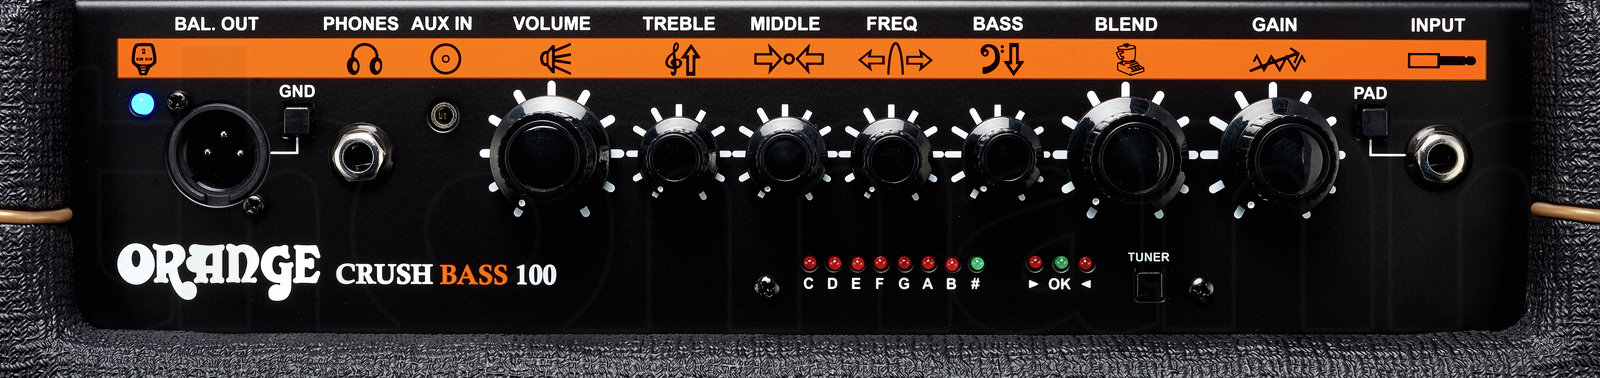 Orange Crush Bass 100 100w 1x15 - Black - Combo amplificador para bajo - Variation 2